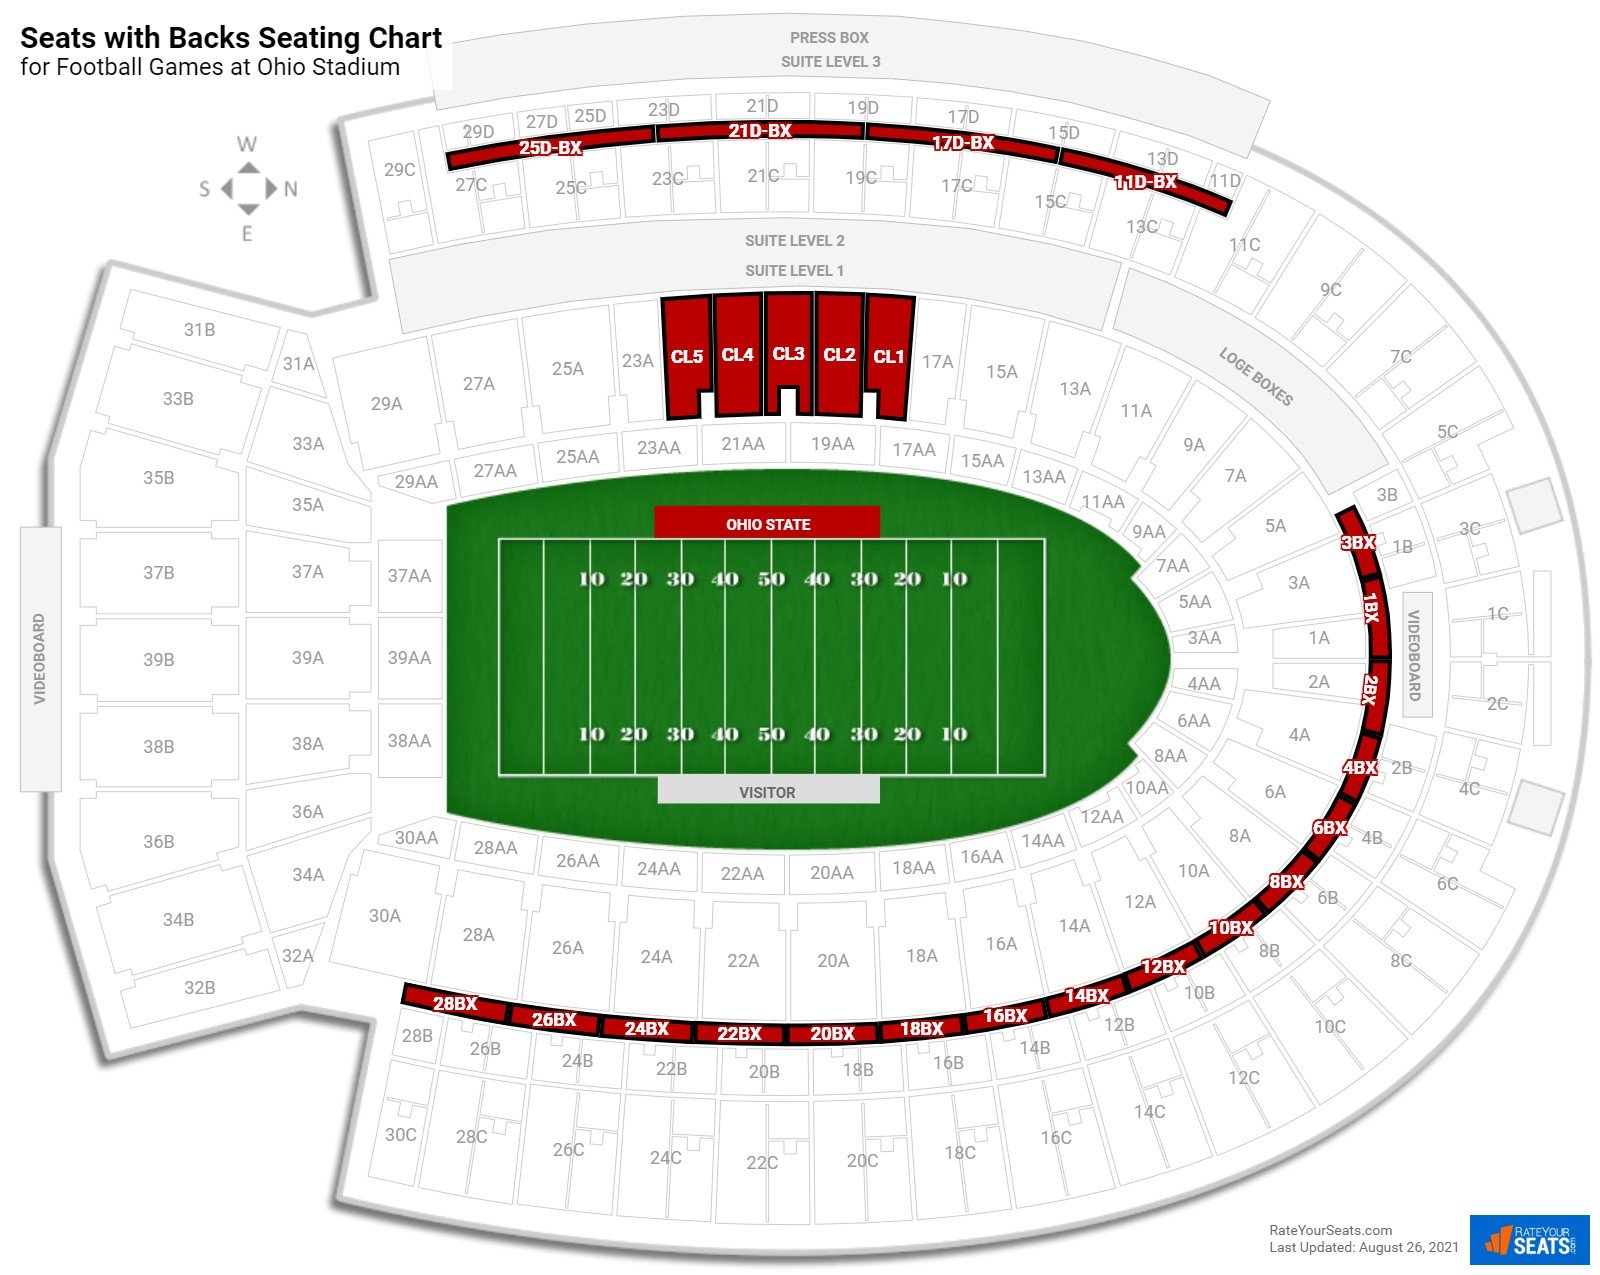 Football Seats with Backs Seating Chart at Ohio Stadium